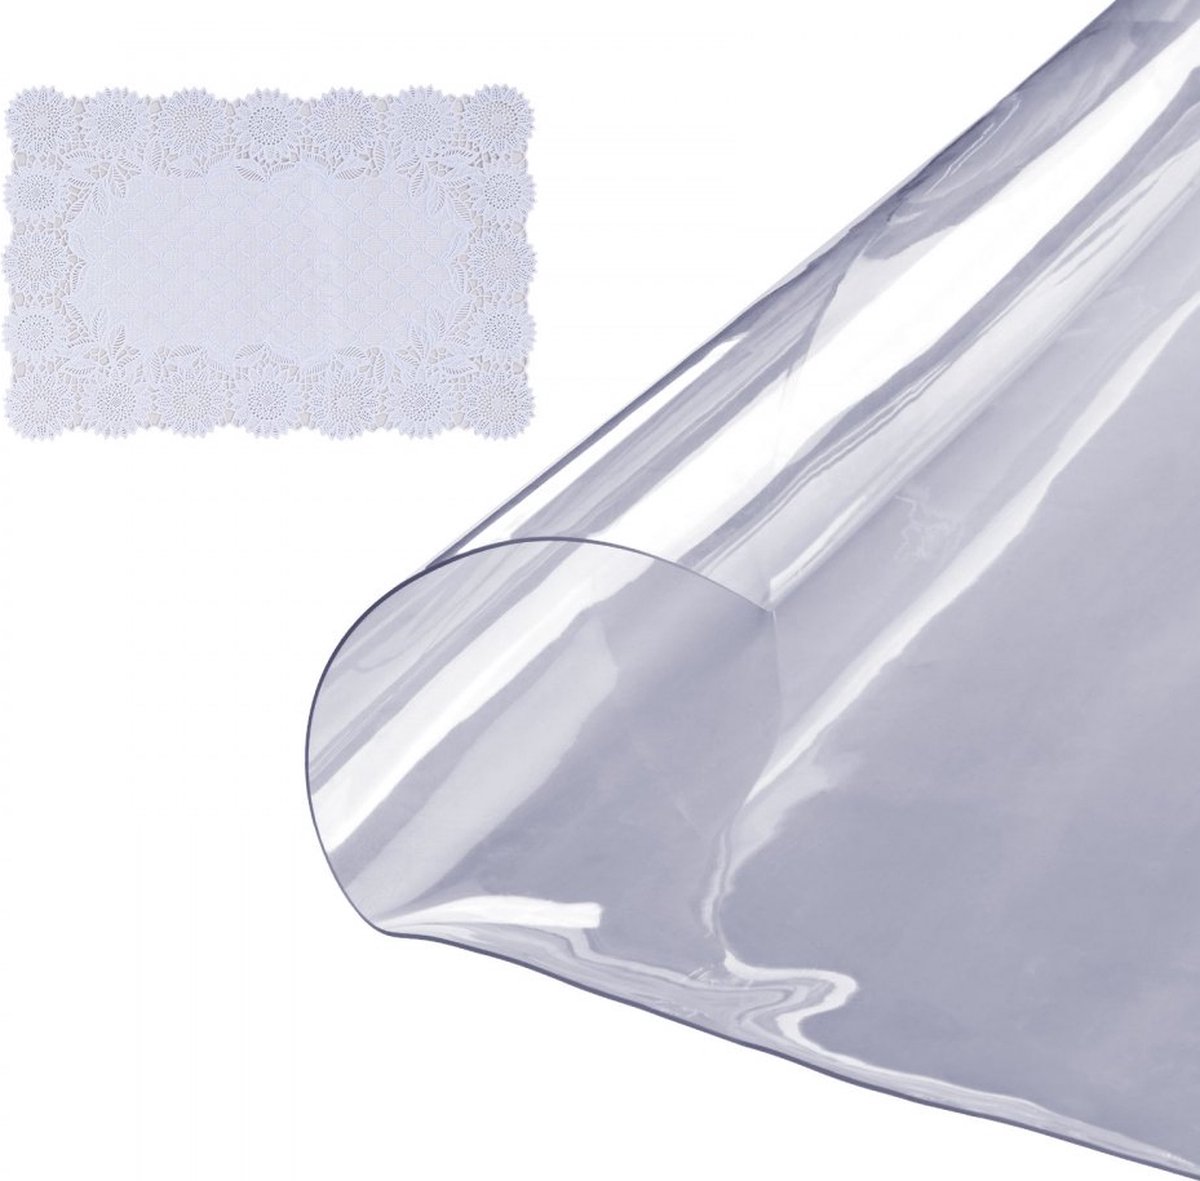 Dakta® tafelfolie tafelbescherming transparant 1,5 mm dikte, φ 1230 mm tafelbeschermingsfolie PVC rond tafelkleed tafelfolie afwasbaar slijtvast hittebestendig waterdicht tafelbeschermingsfolie woonkamer